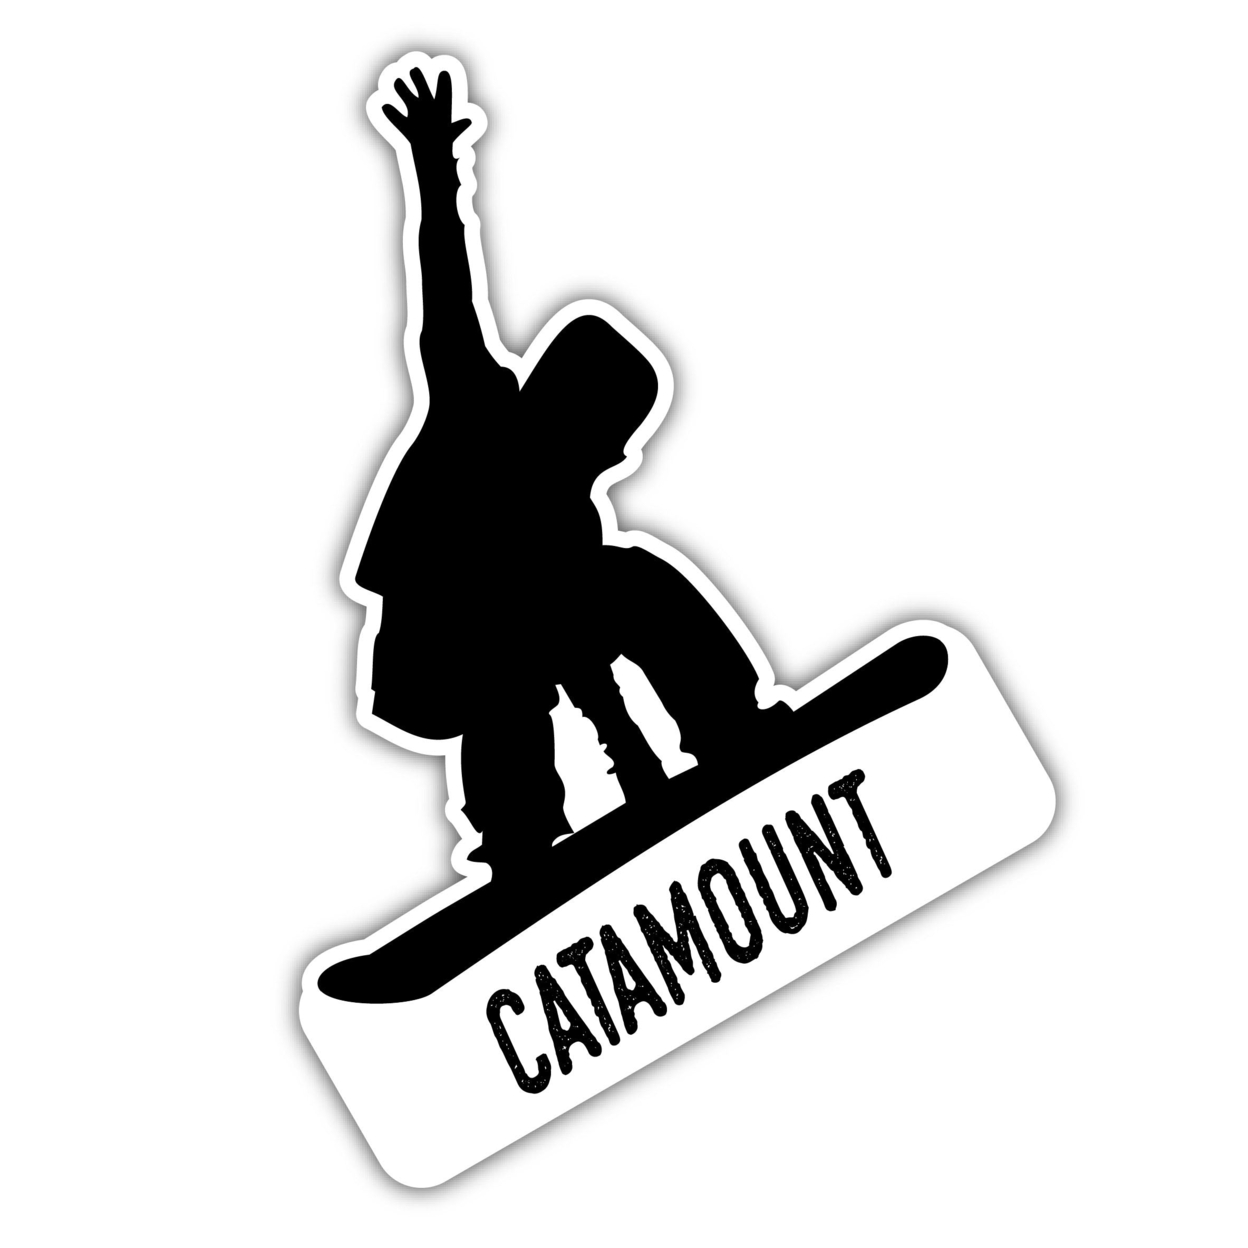 Catamount New York Ski Adventures Souvenir Approximately 5 X 2.5-Inch Vinyl Decal Sticker Goggle Design